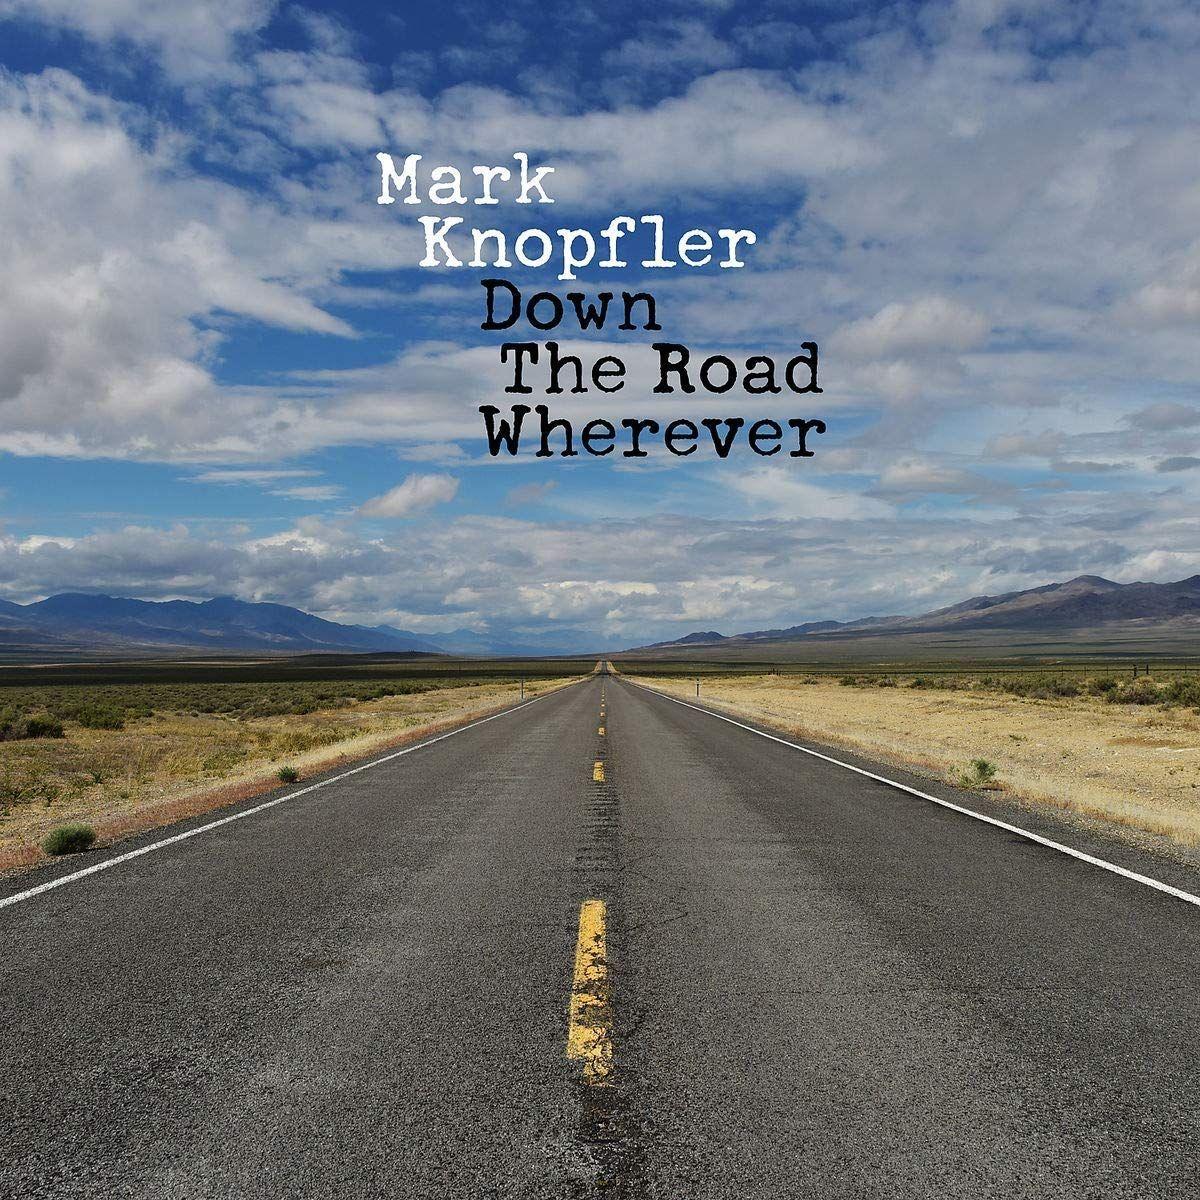 Capa do álbum "Down the Road Wever", de Mark Knopfler